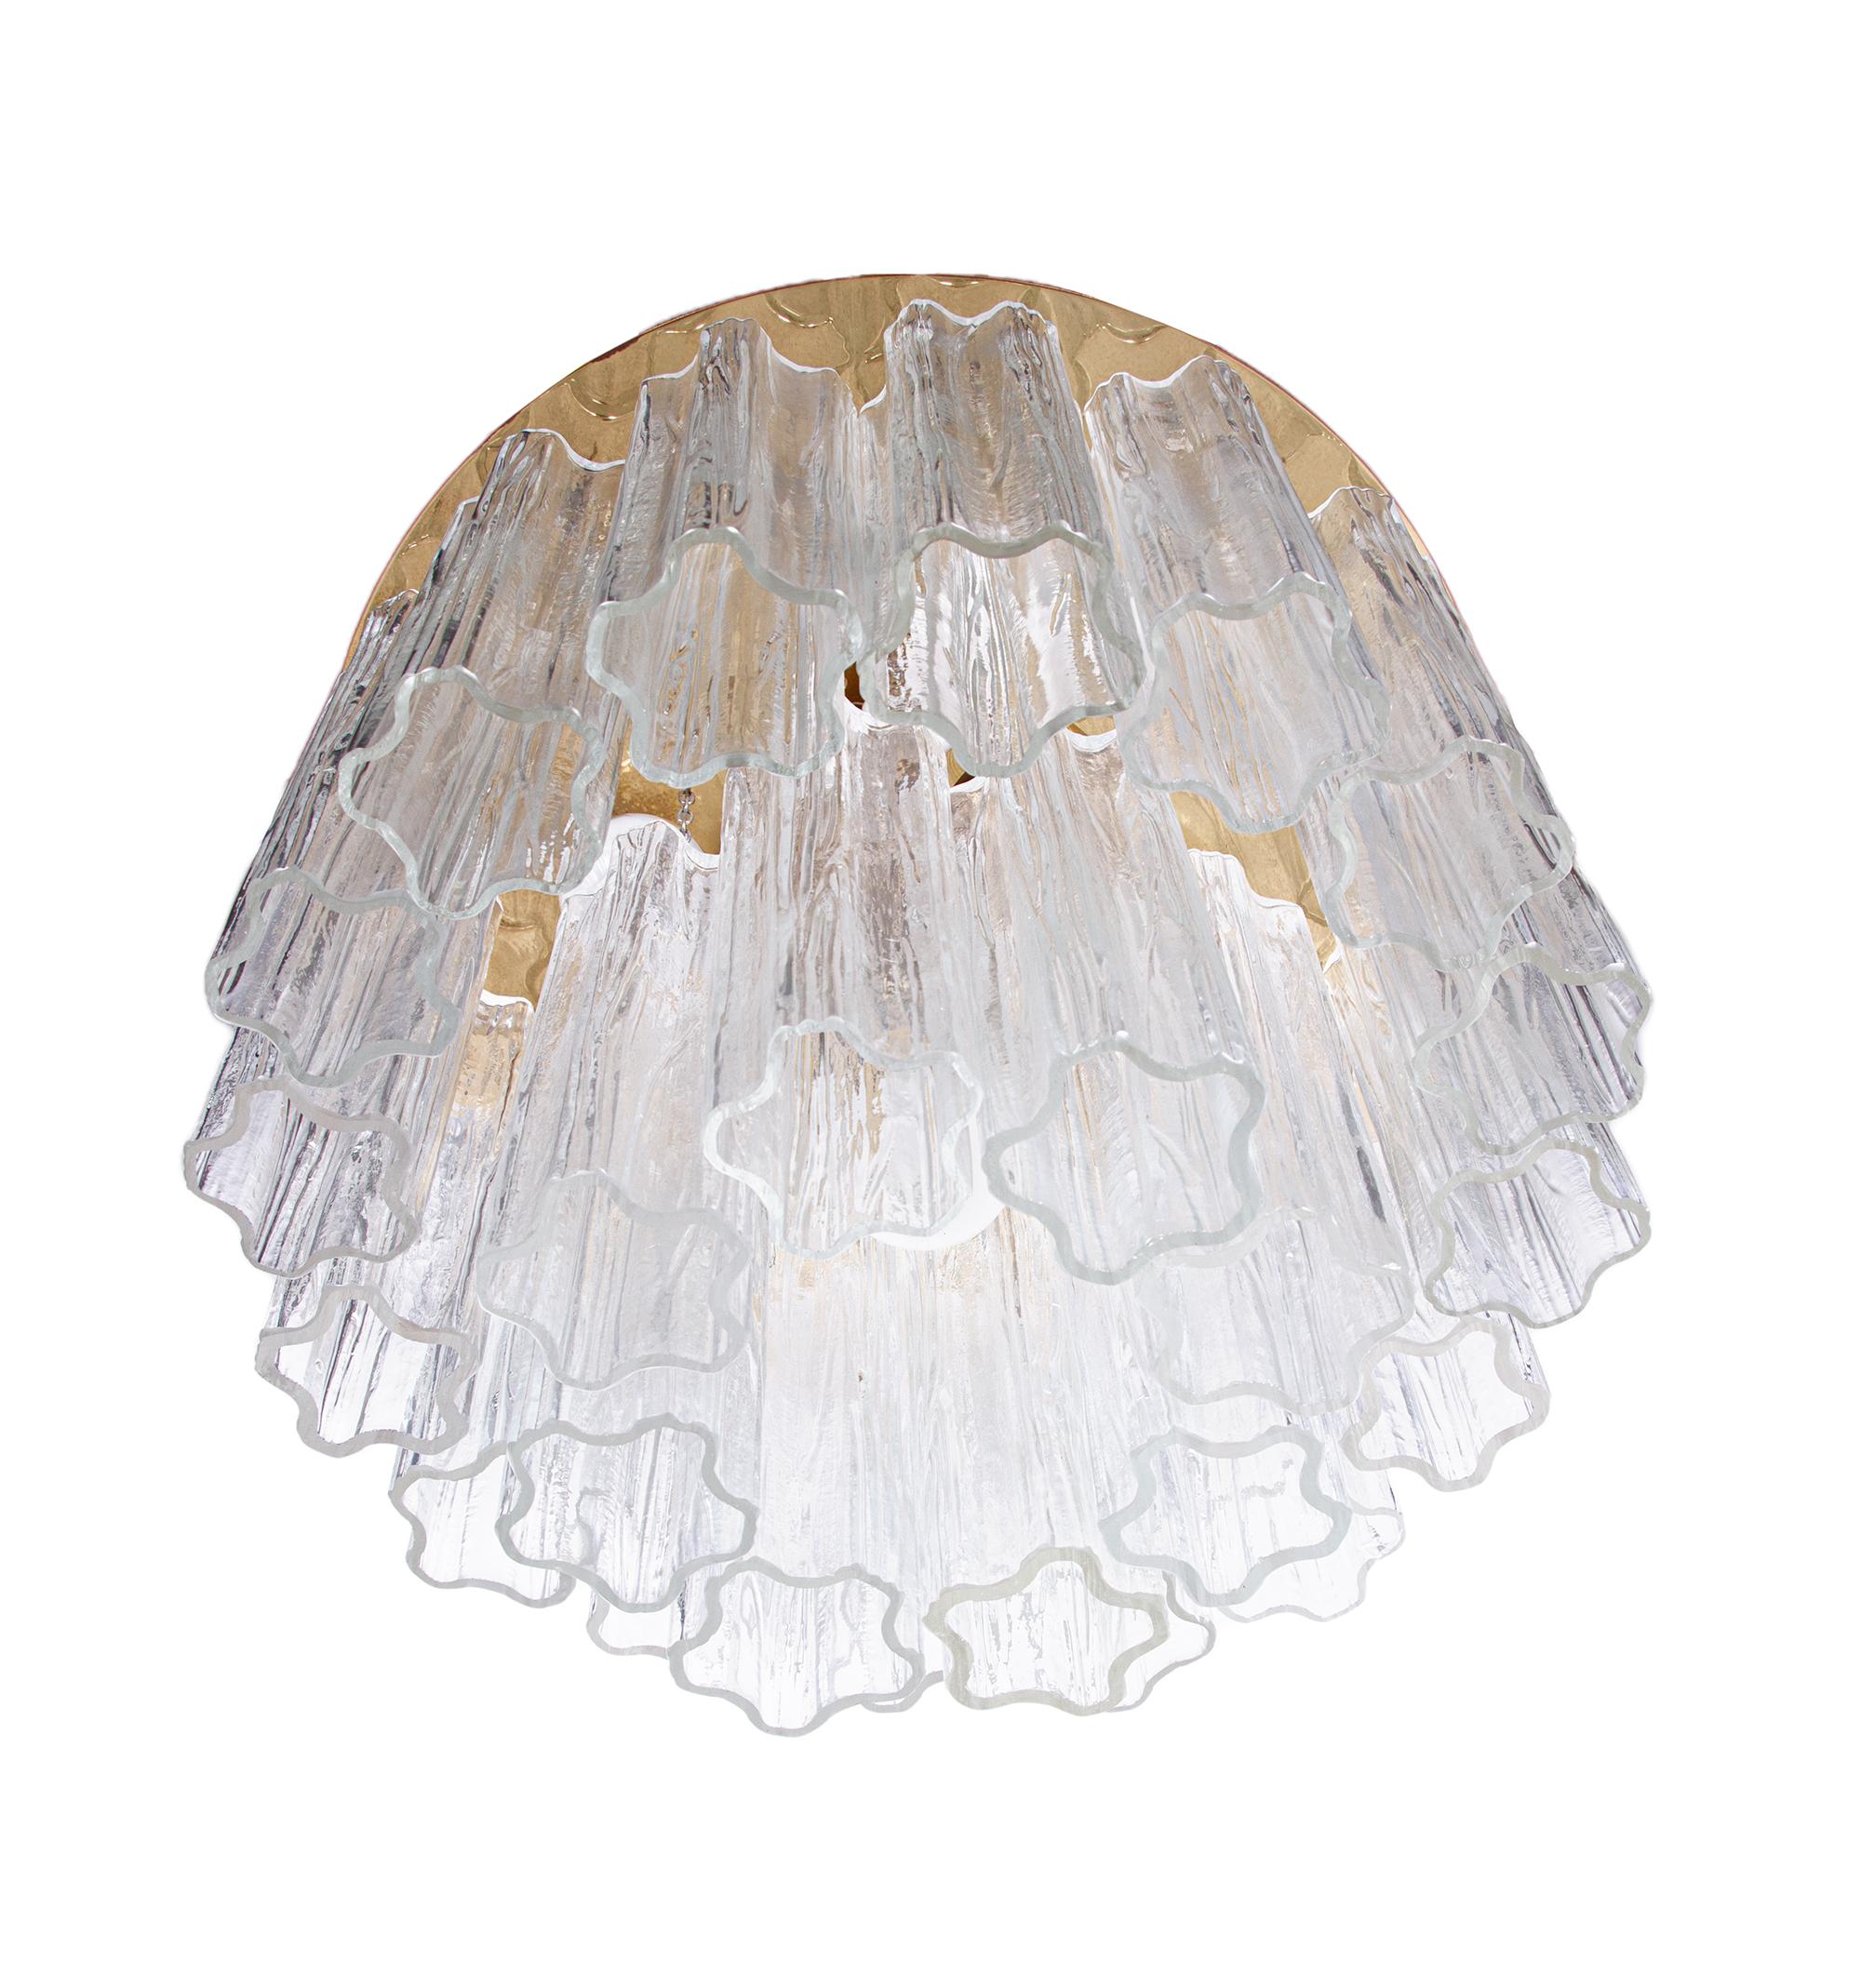 Mid-Century Modern Kalmar Flush Mount Ceiling Light with Venini Tronchi Murano Glass & Brass, 1960s For Sale